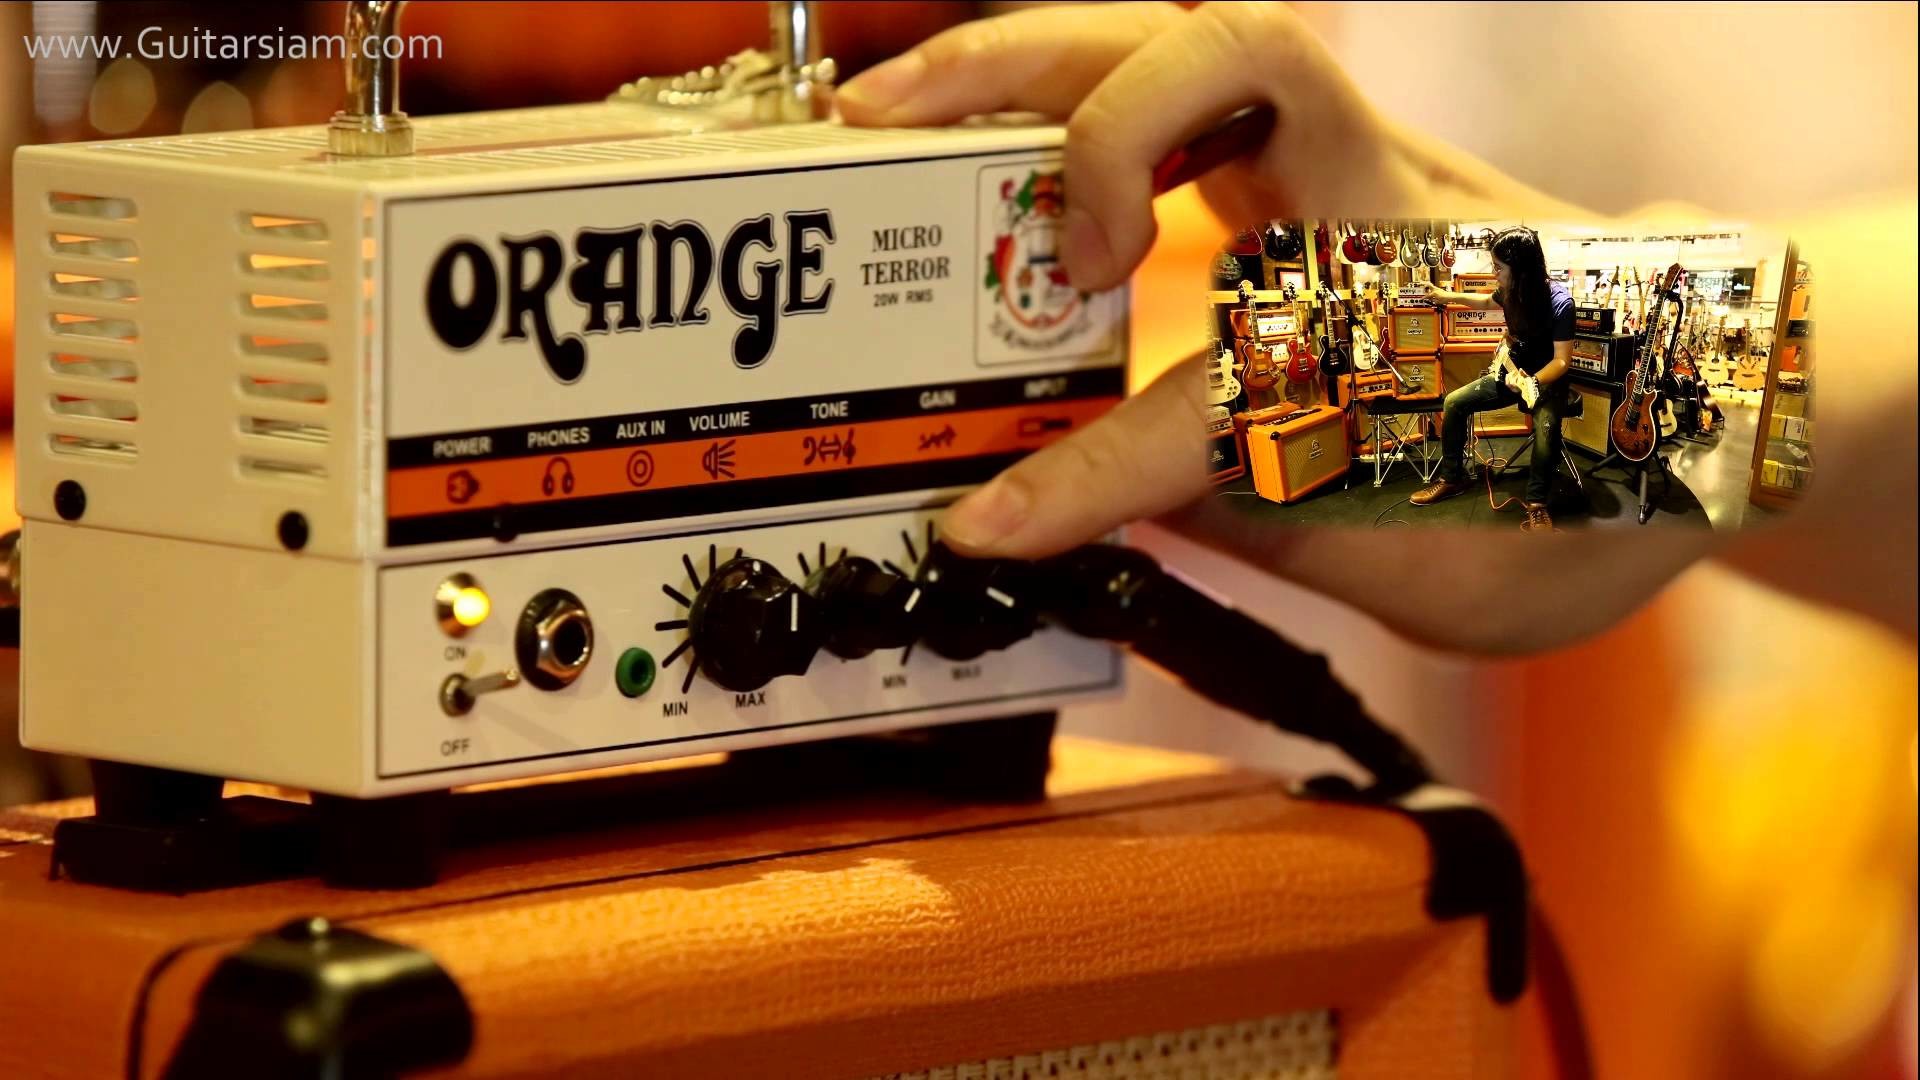 1920x1080 Image Gallery: orange guitar amp wallpaper